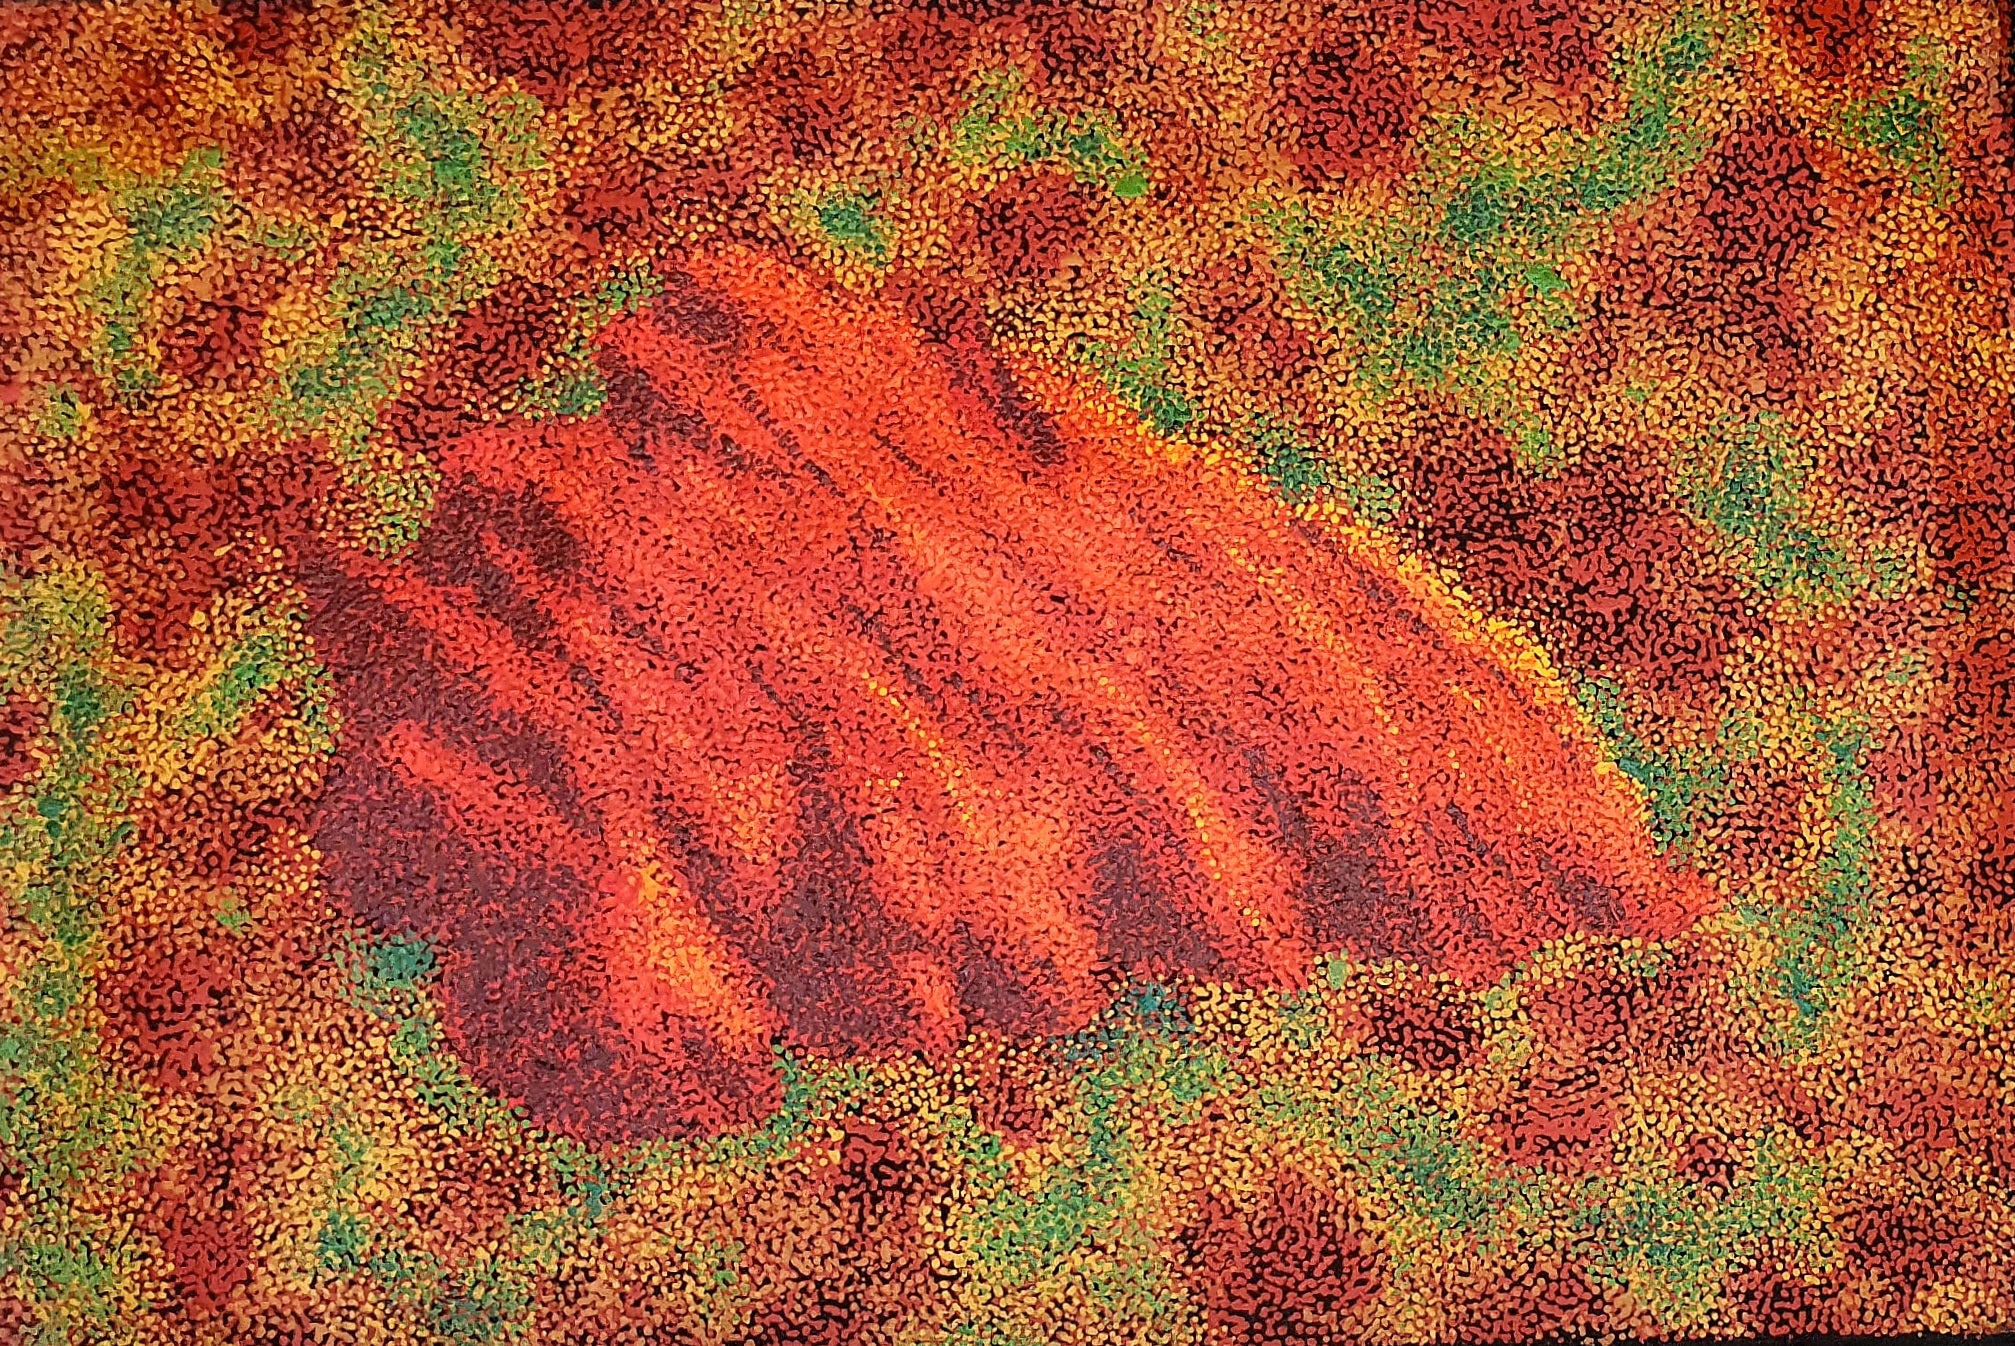 'Ayers Rock' | 60x90cm